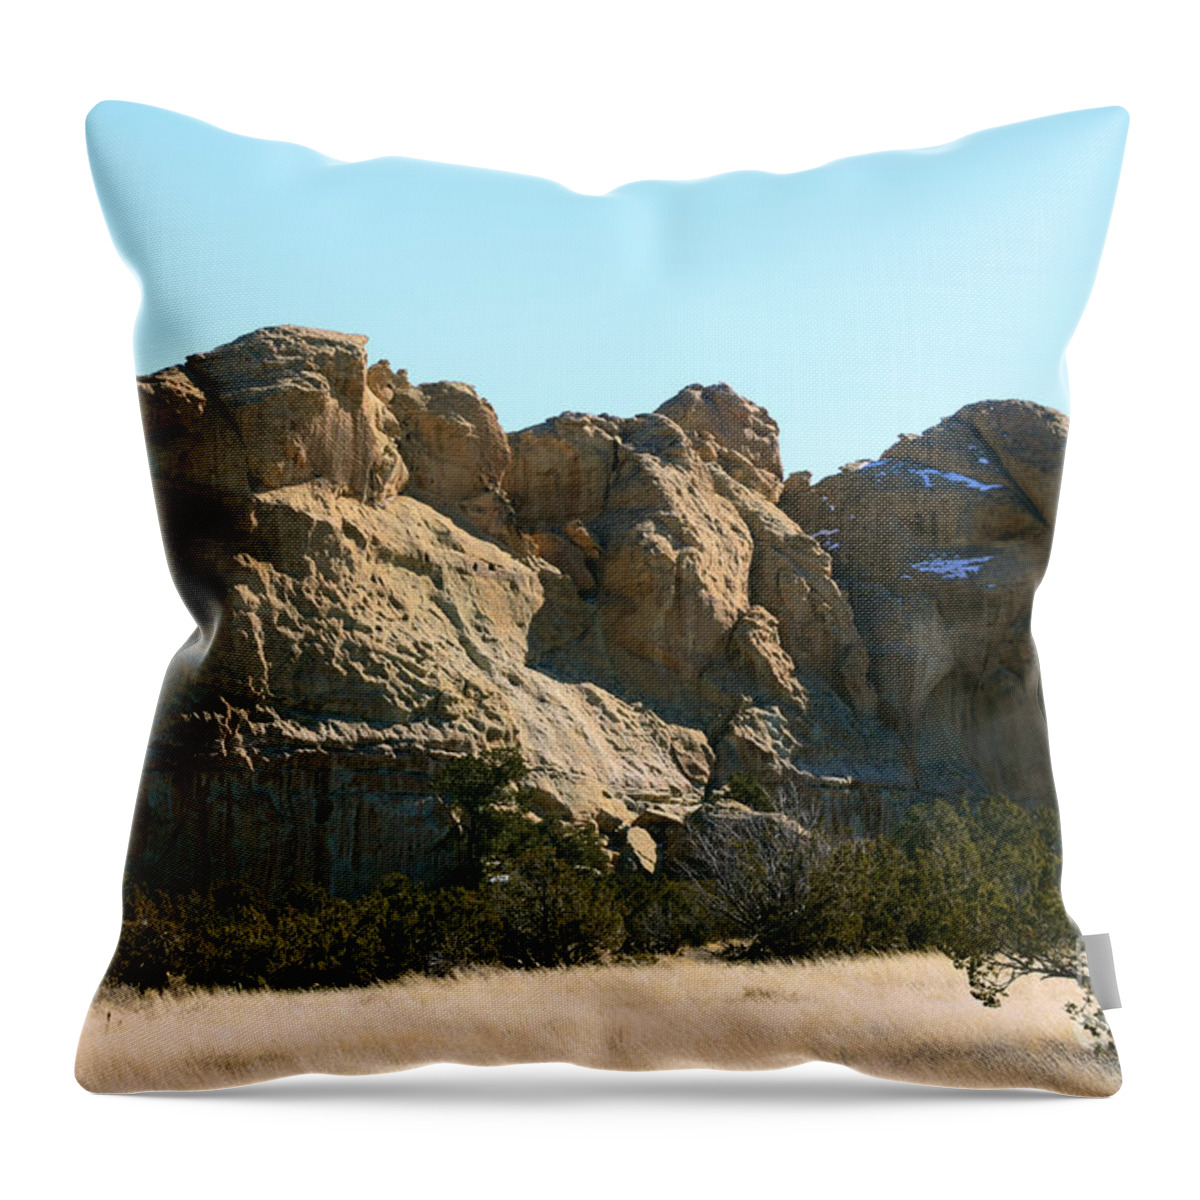 Southwest Landscape Throw Pillow featuring the photograph Sleeping elephant by Robert WK Clark